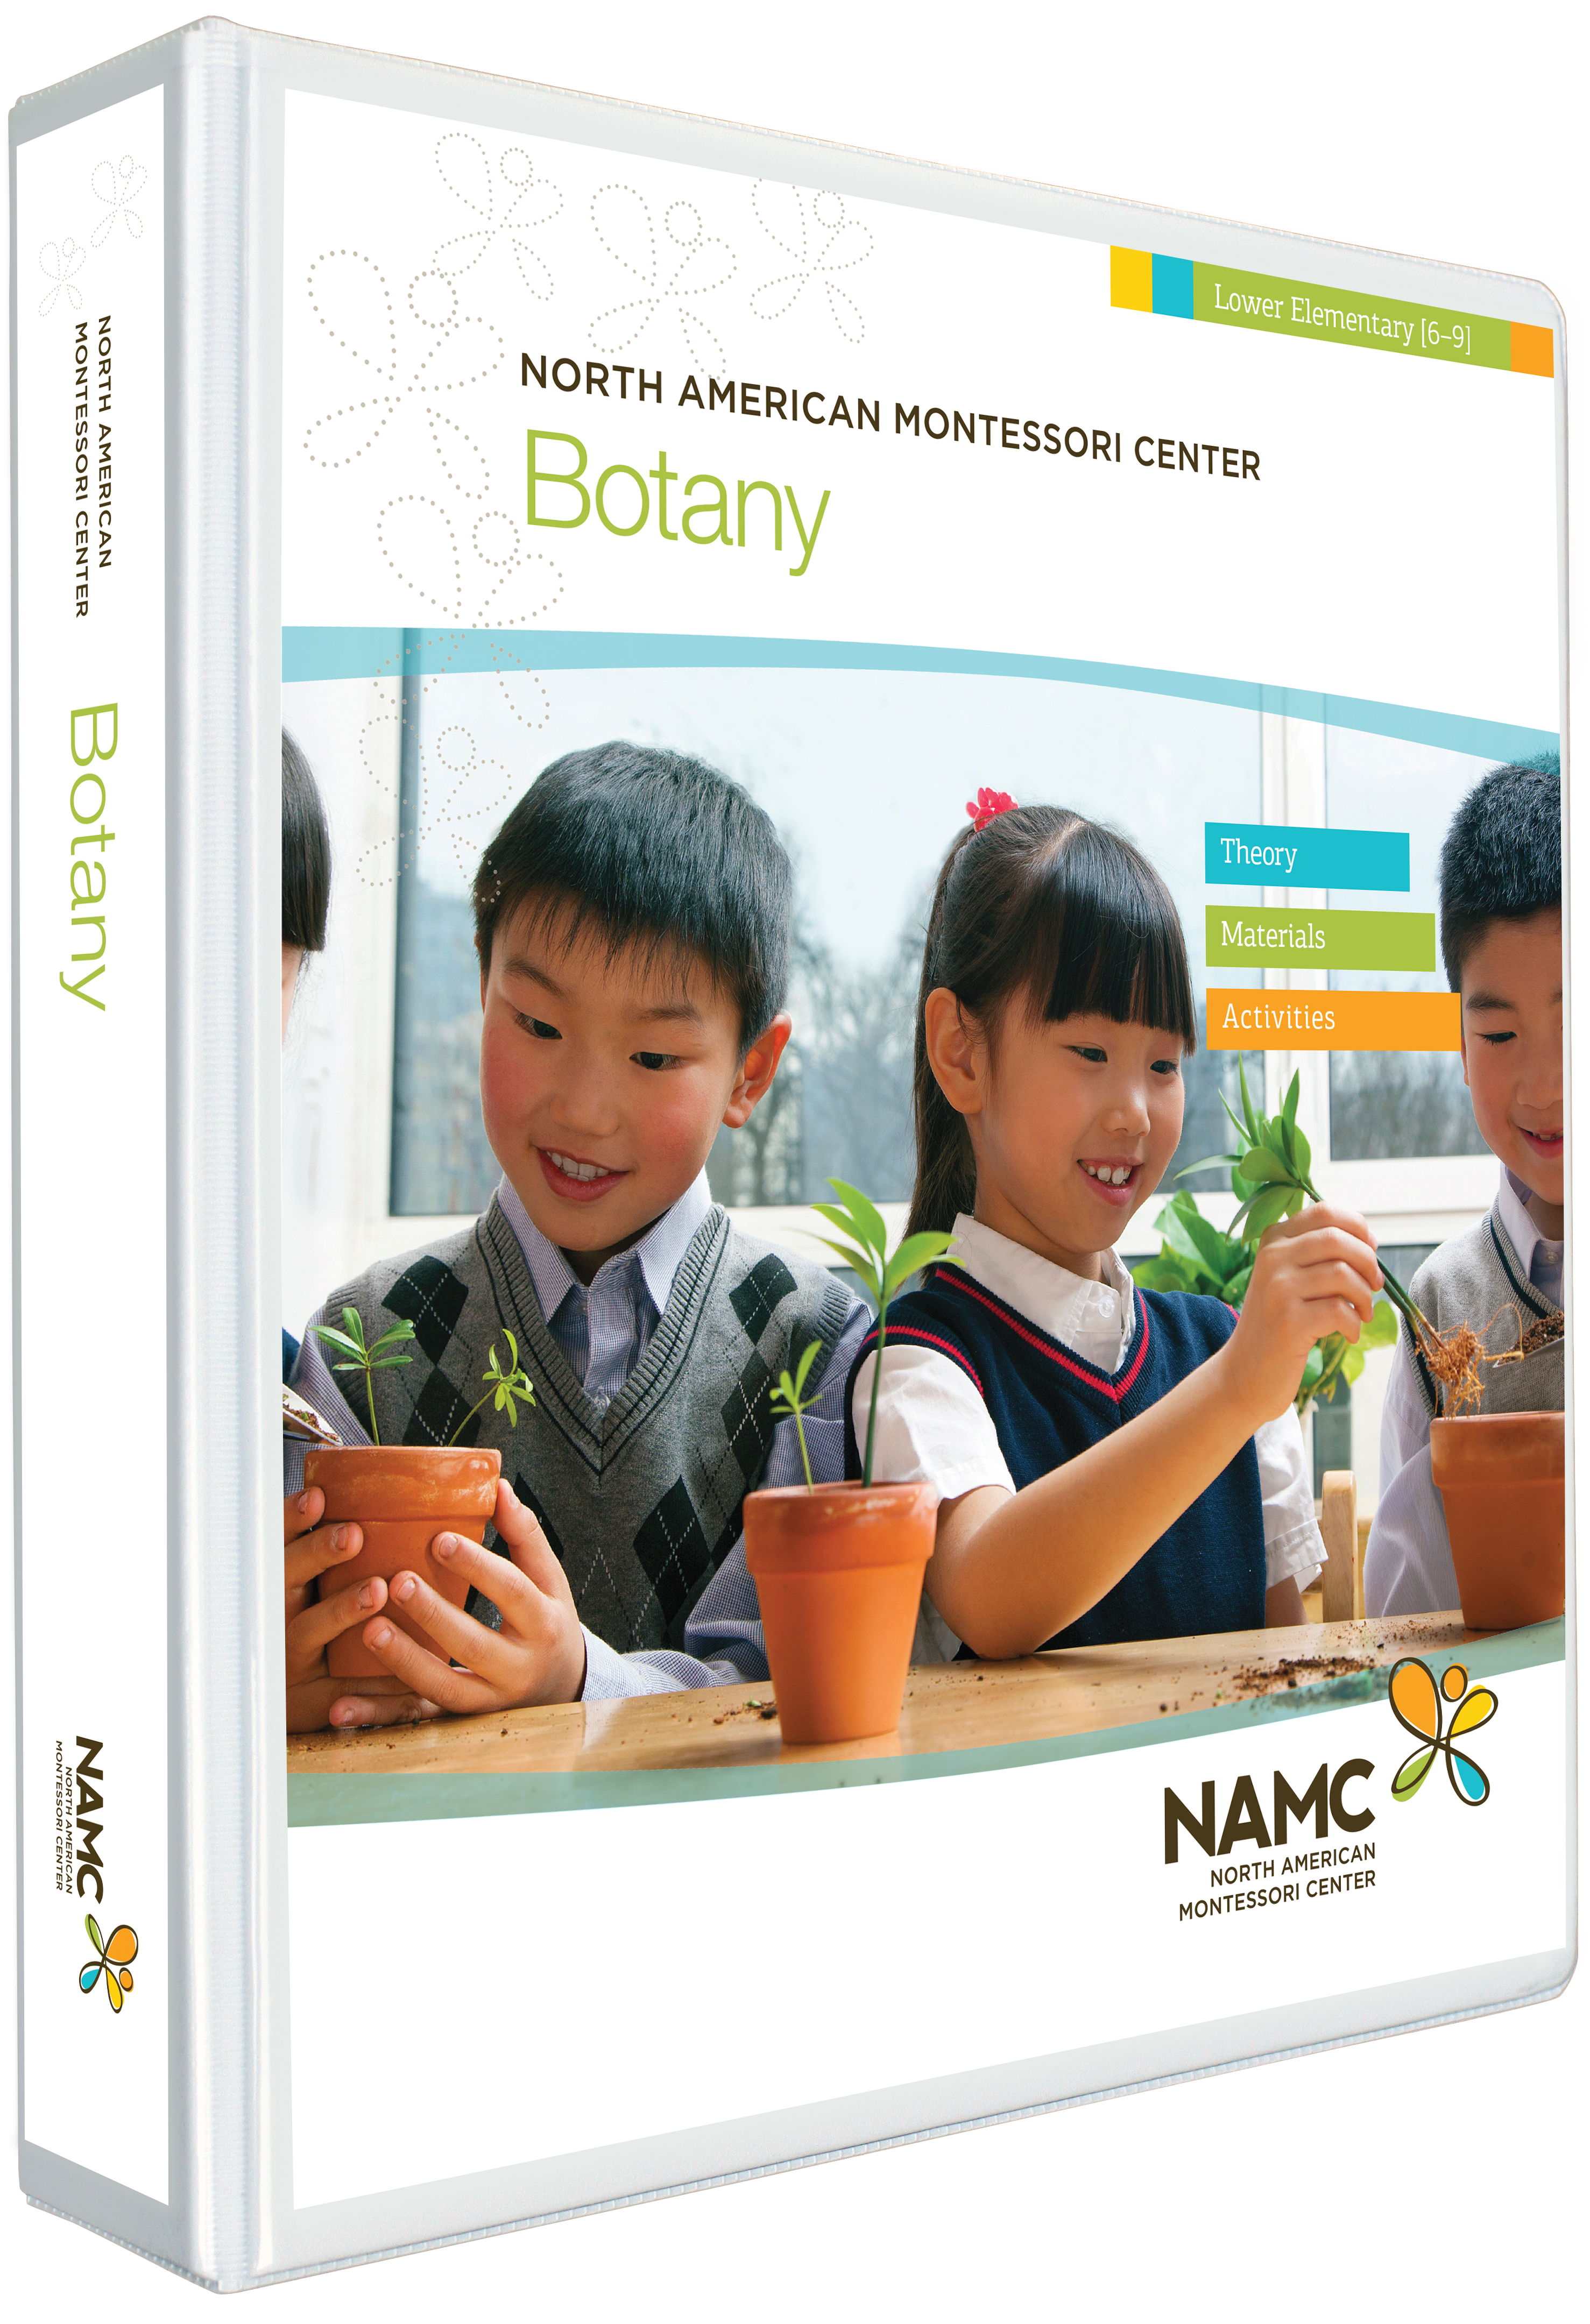 NAMC's Lower Elementary Montessori Botany Manual